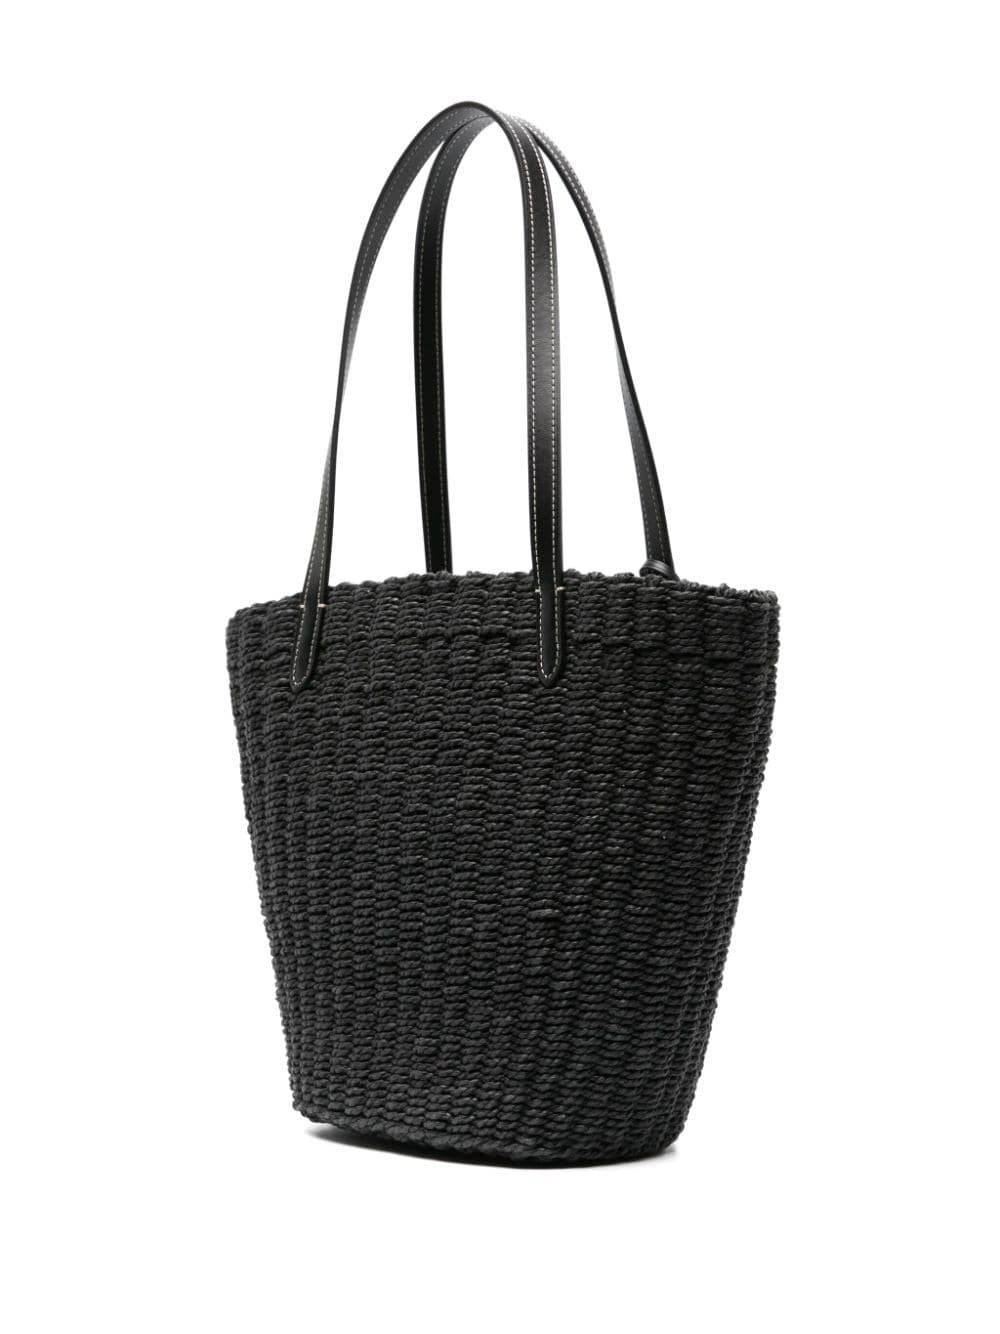 COACH Classic Black Straw Tote Handbag for Women